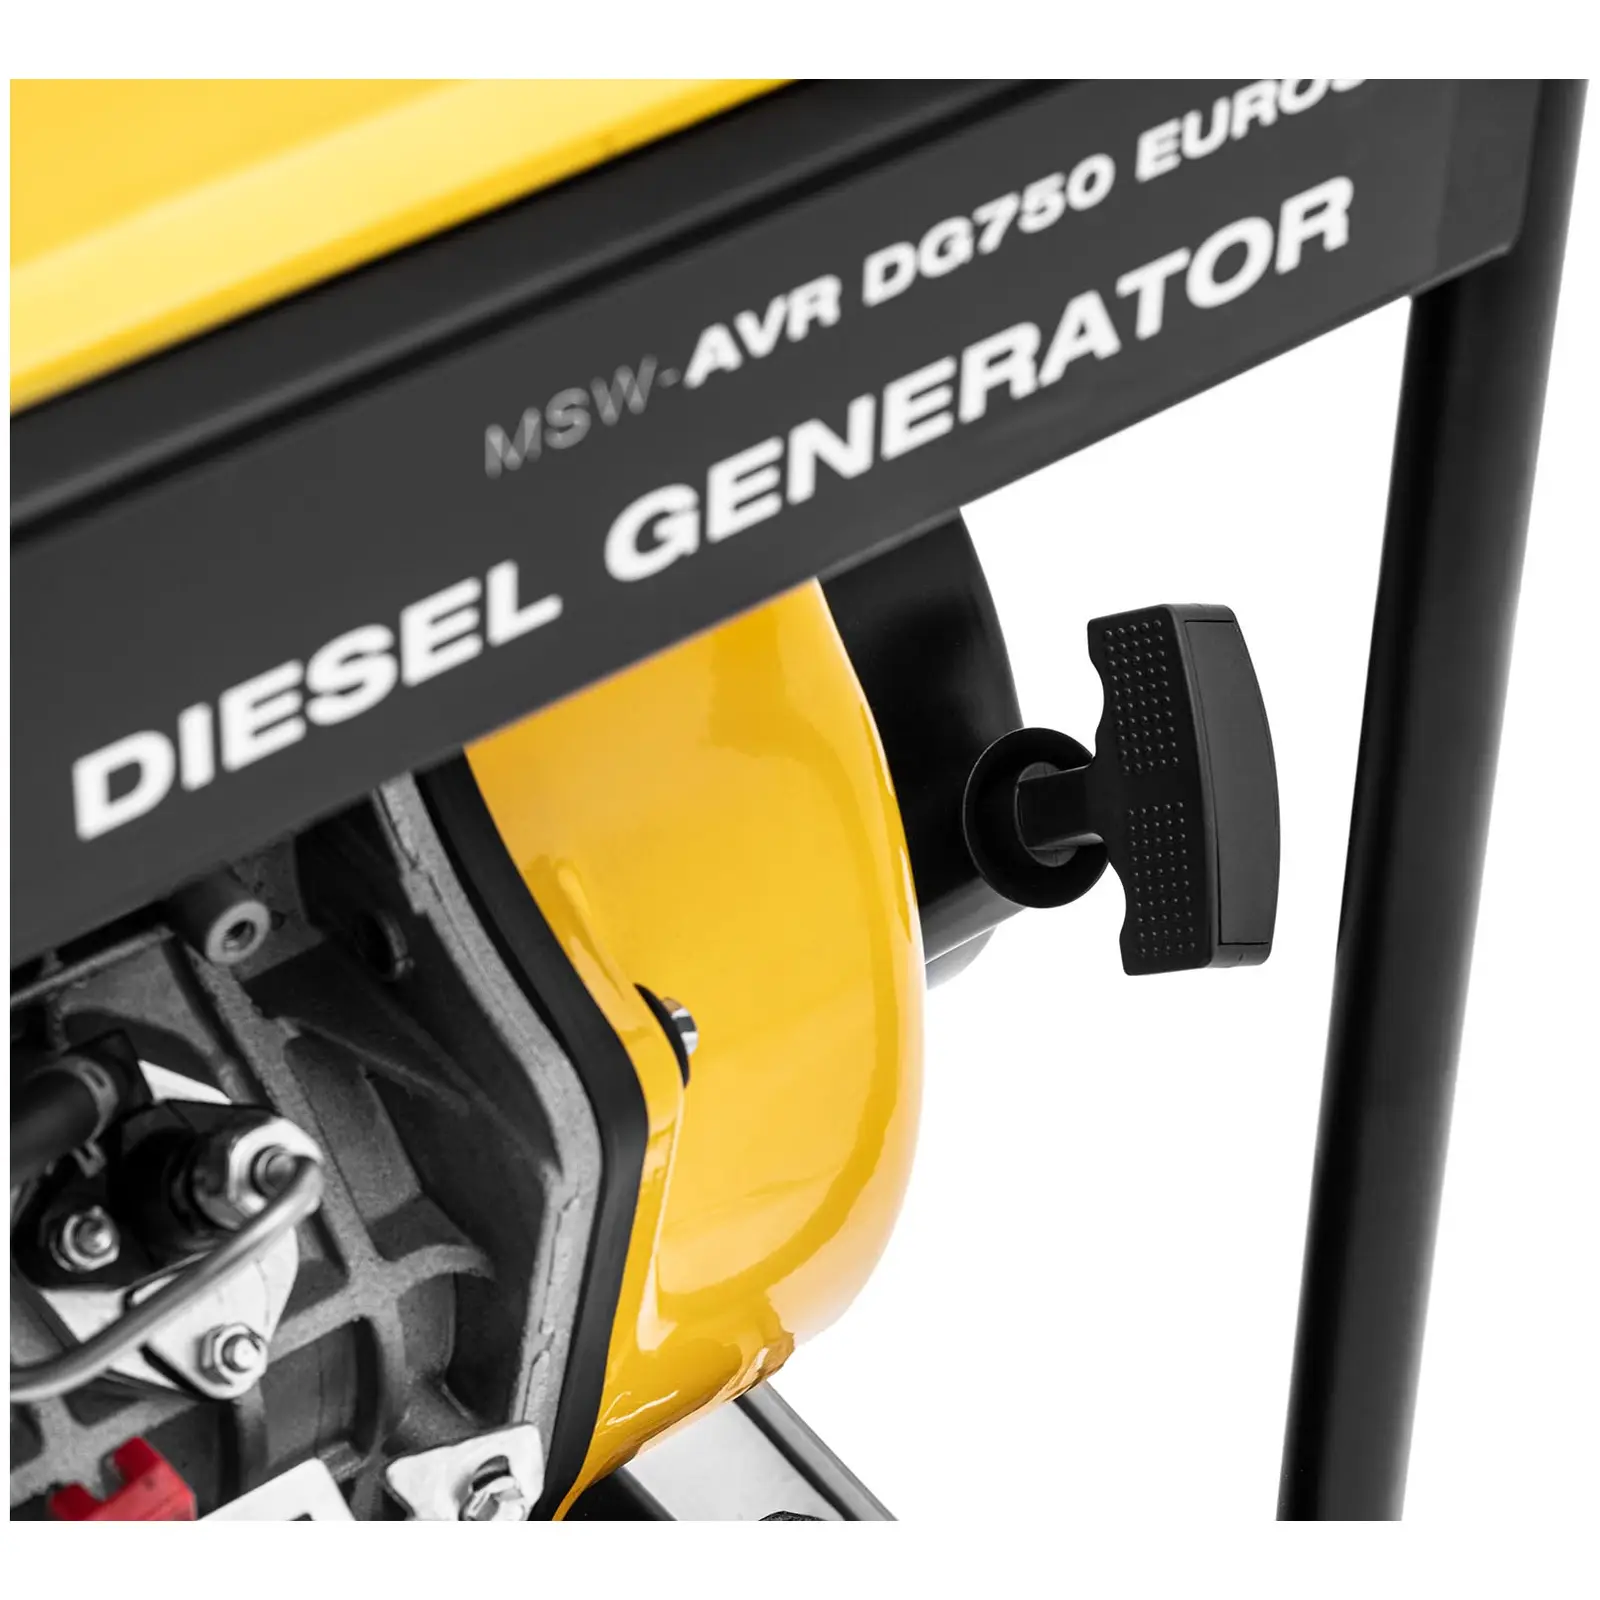 Agregat prądotwórczy Diesel - 1650 / 4600 W - 12,5 l - 230/400 V - mobilny - AVR - Euro 5